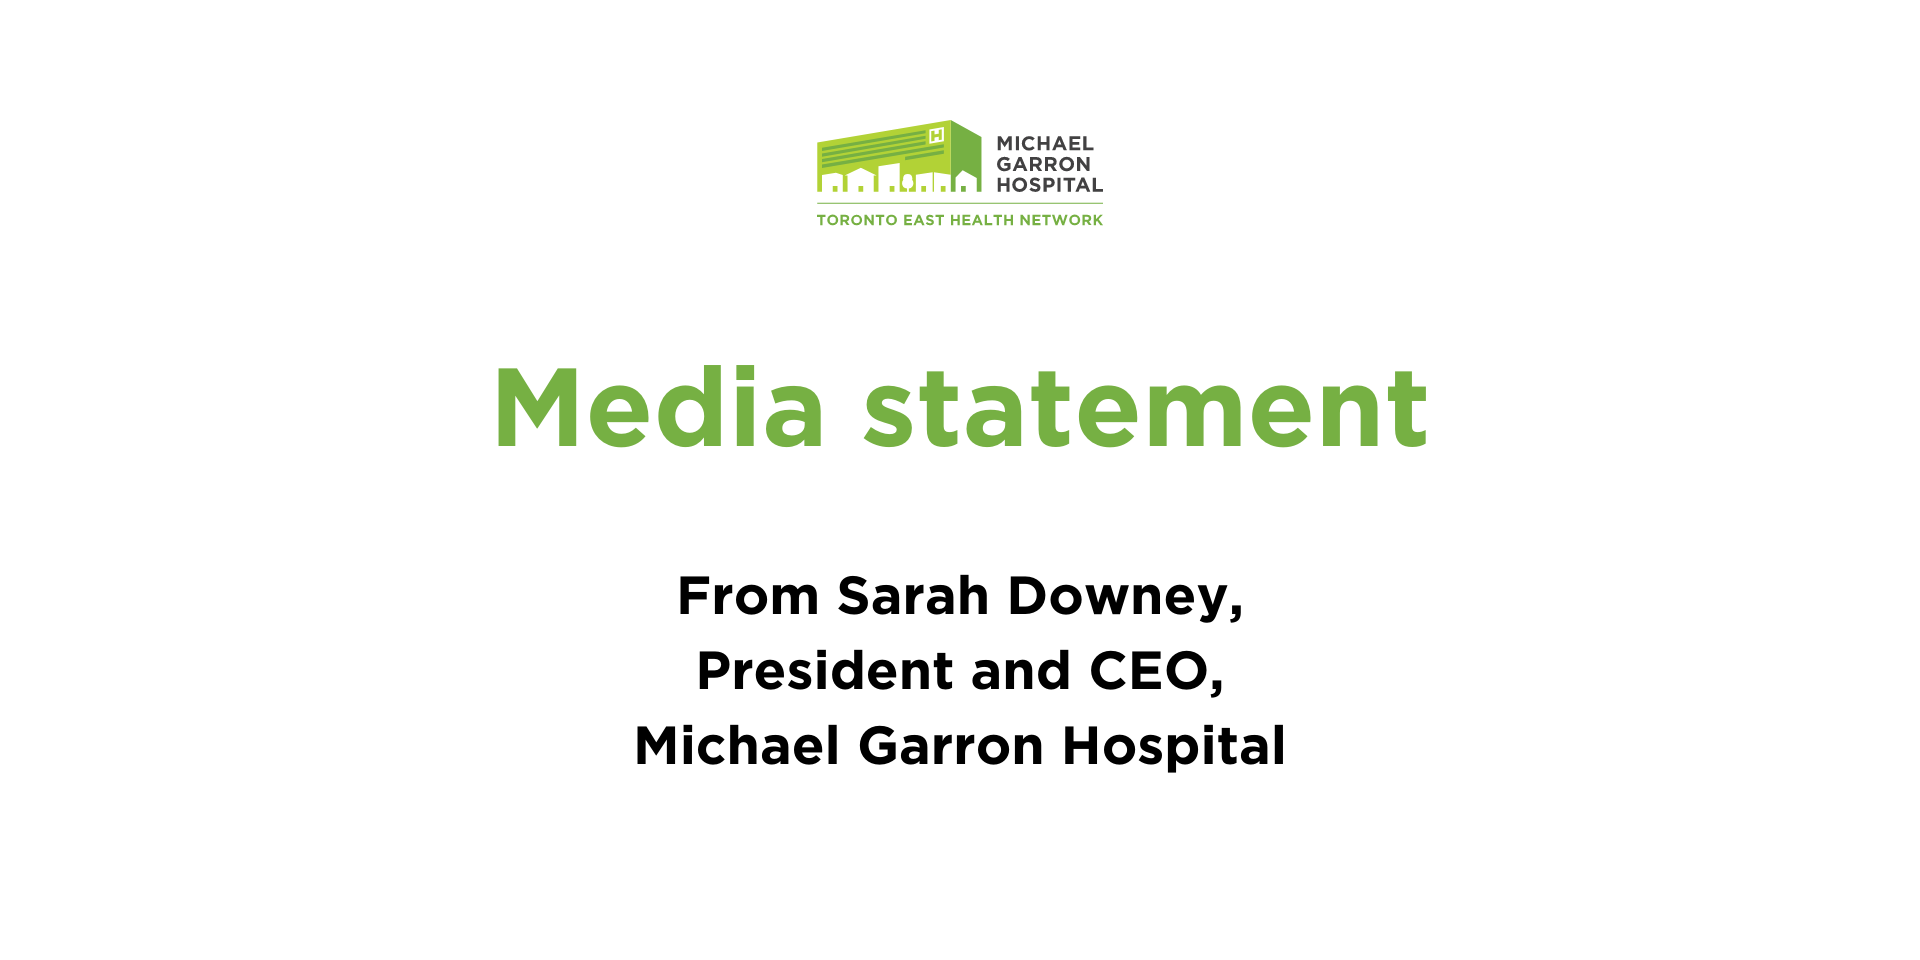 Media statement on behalf of Sarah Downey, President and CEO of Michael Garron Hospital